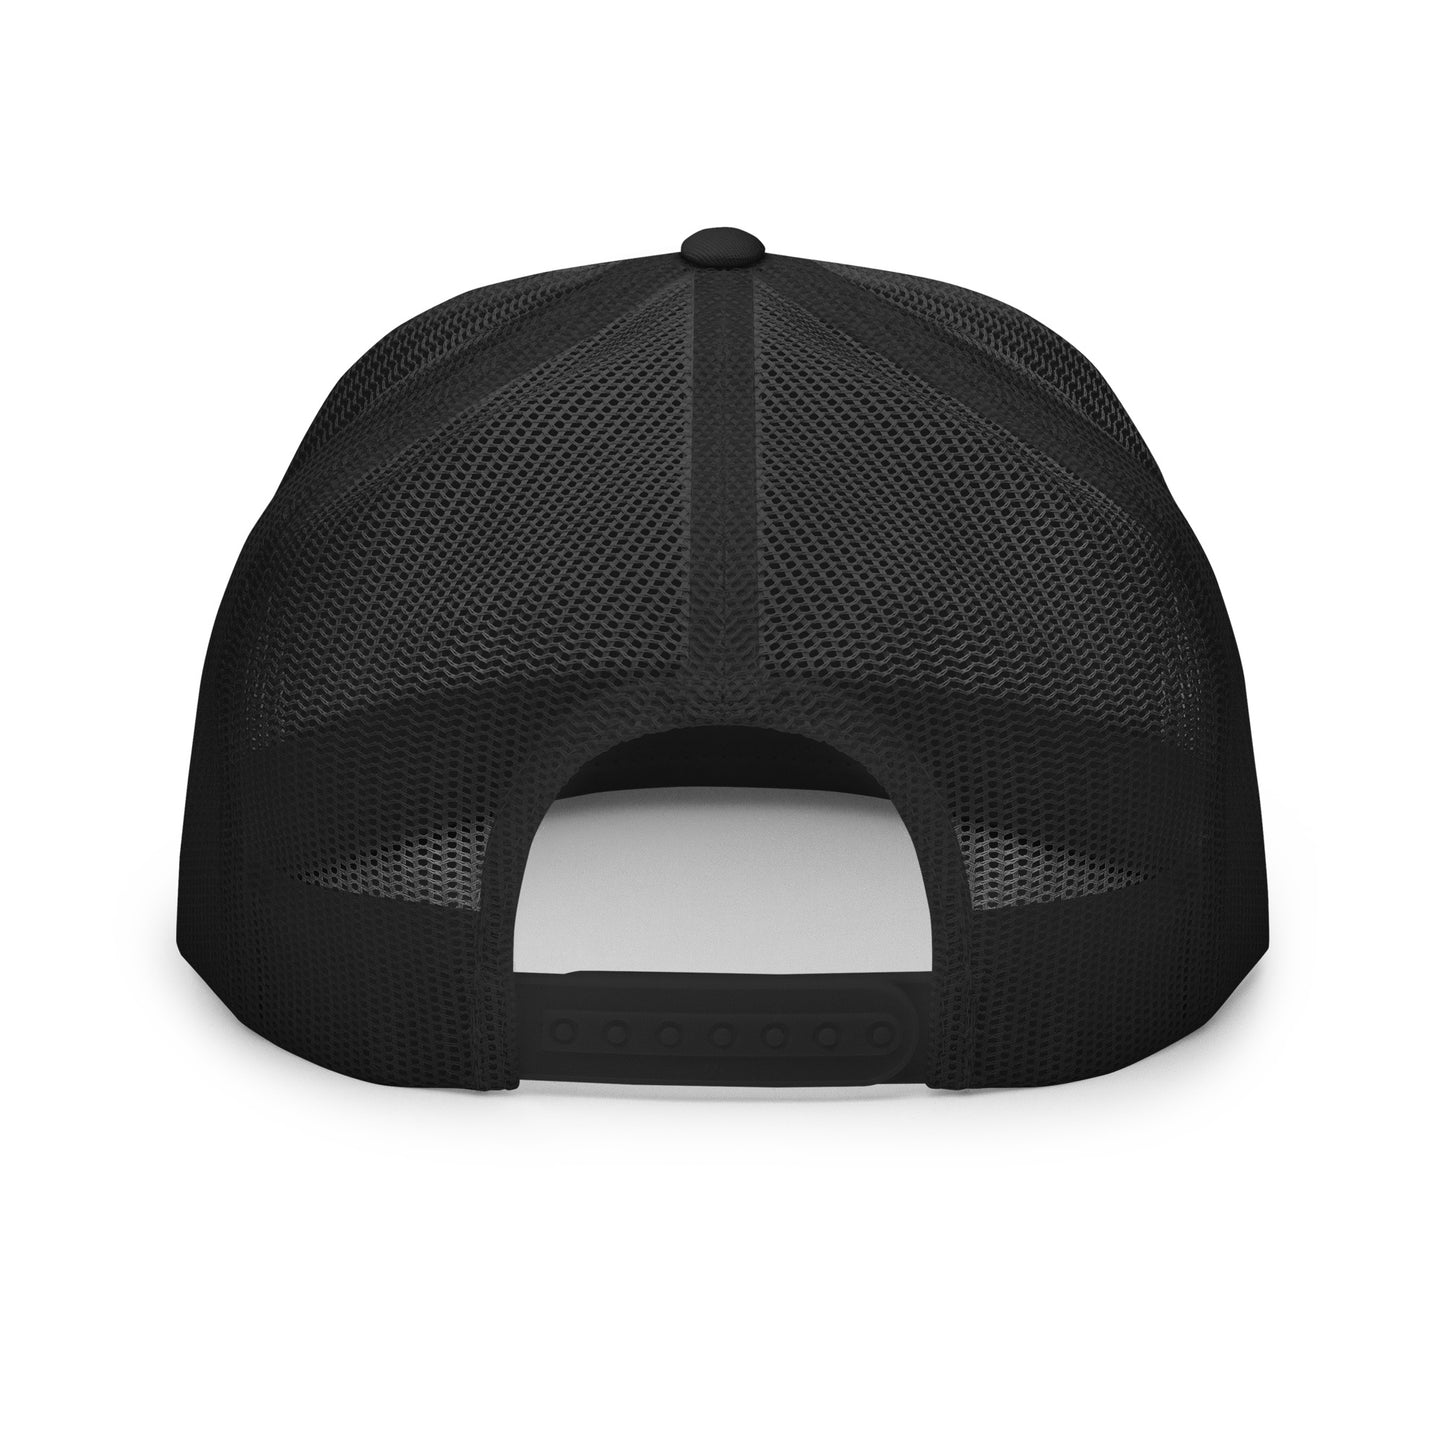 Suketobodo Brand / #01 / Hat / Trucker Cap